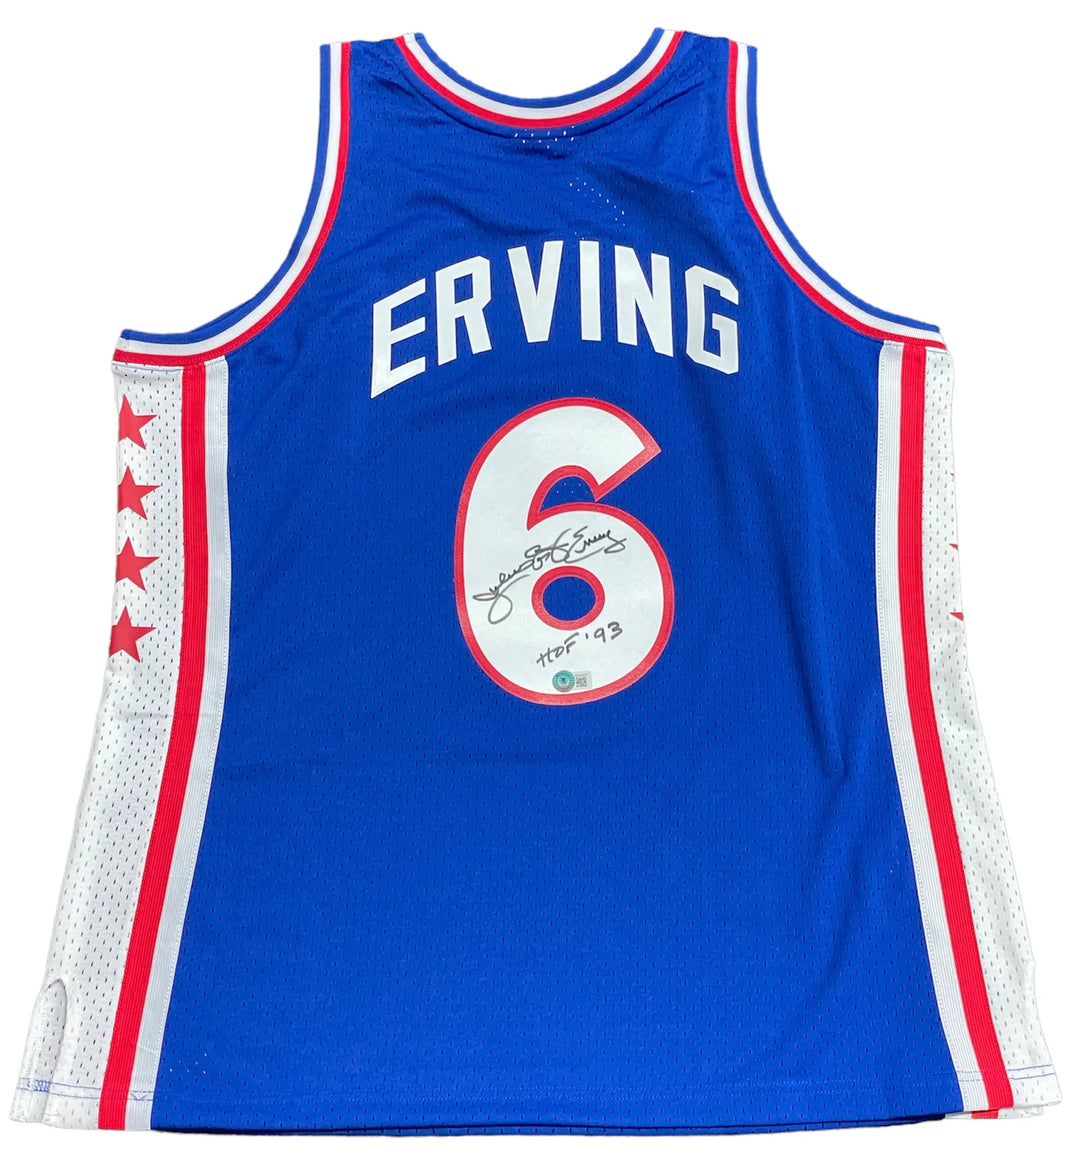 Julius Erving "HOF 93" Autographed Philadelphia 76ers Mitchell & Ness Blue Jerse Image 1